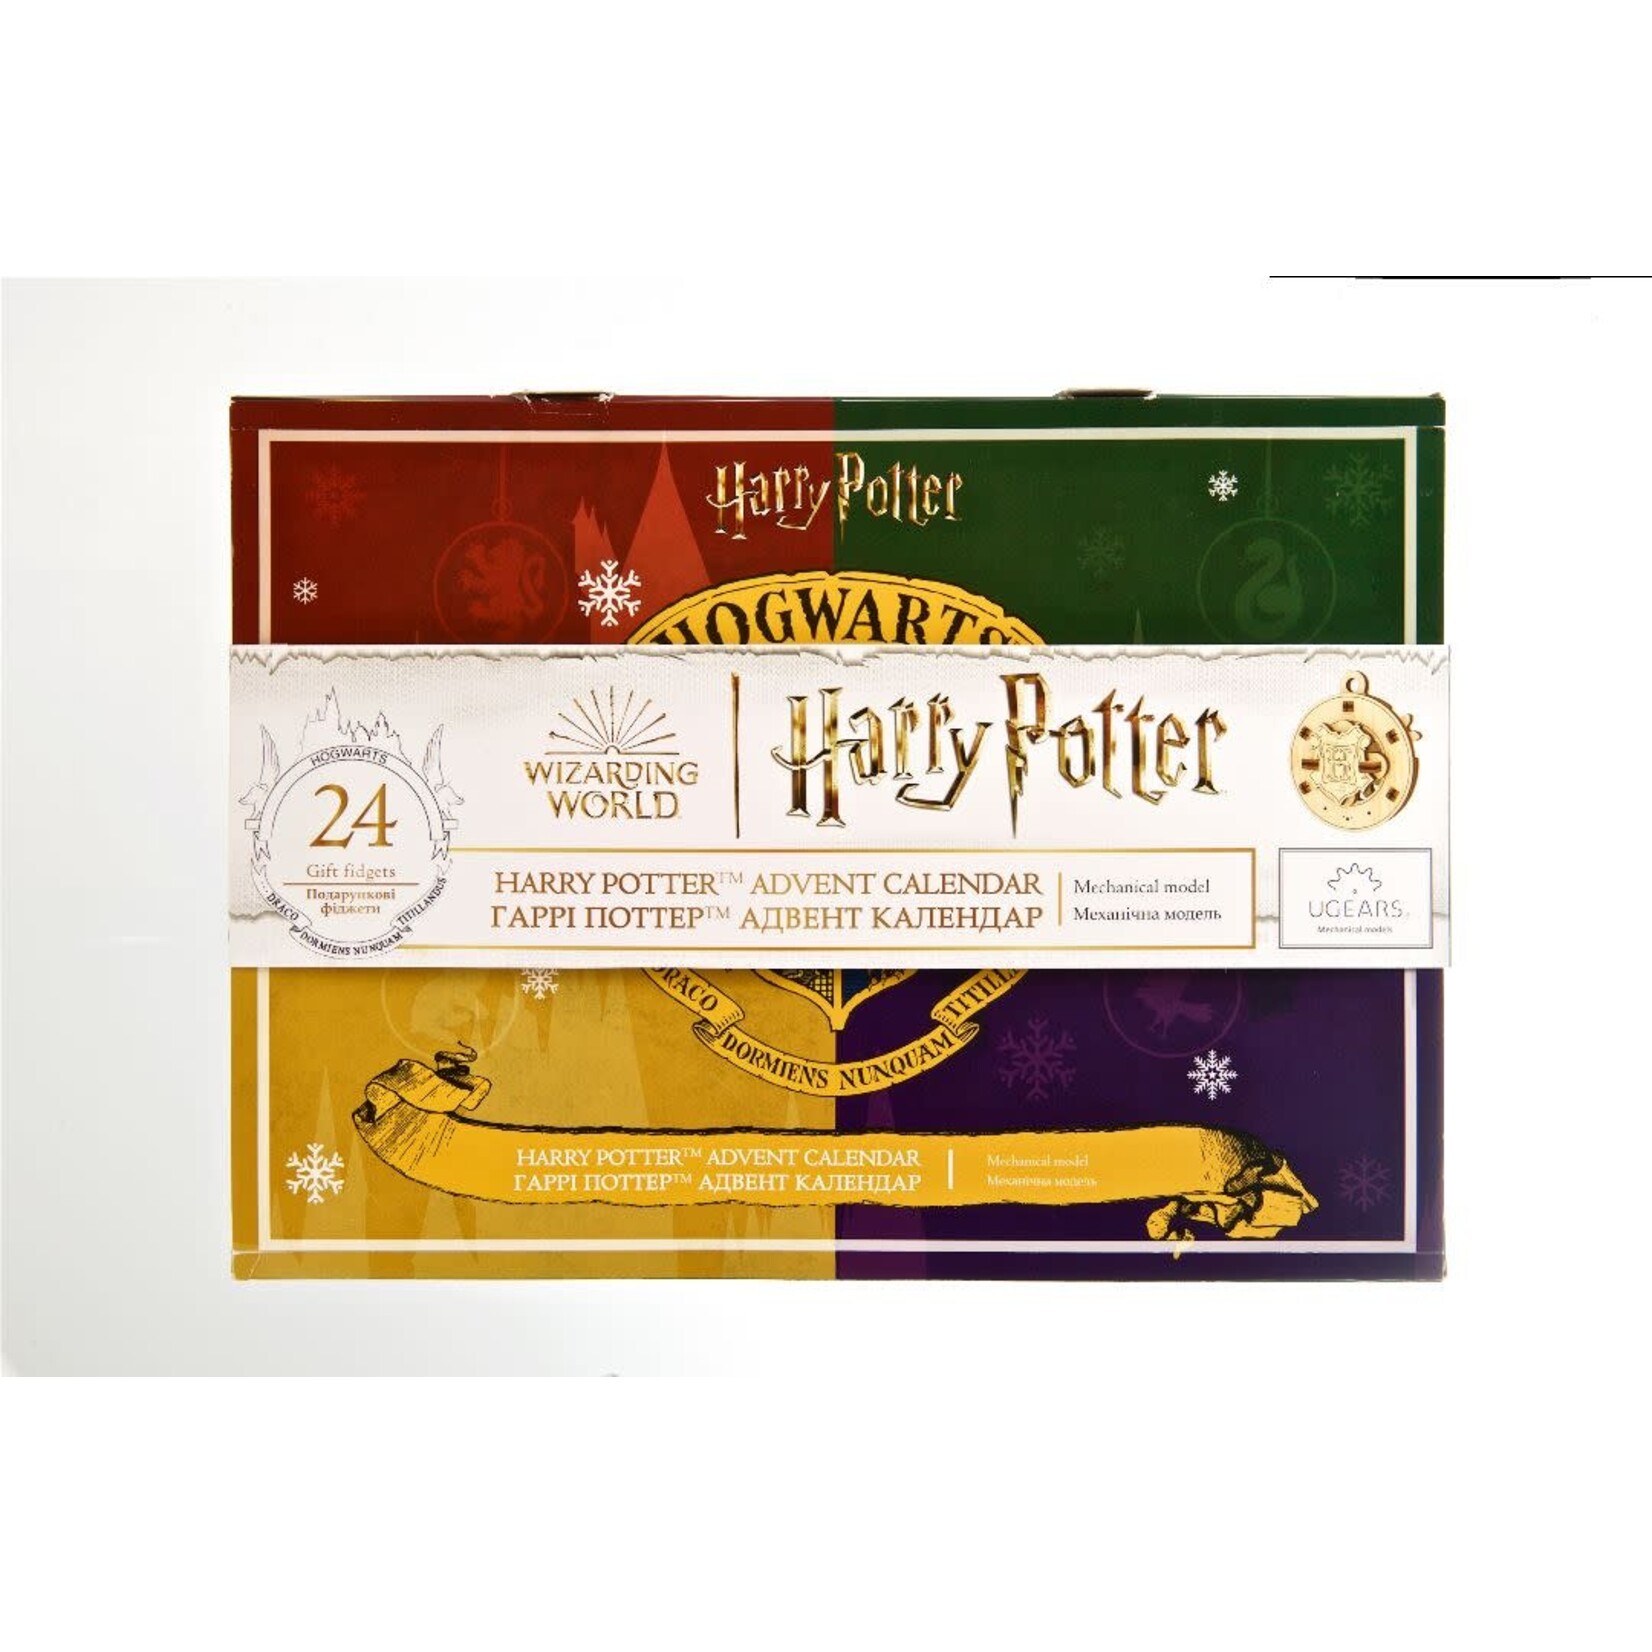 UGEARS UGR70188 Harry Potter Advent Calendar (247pc)